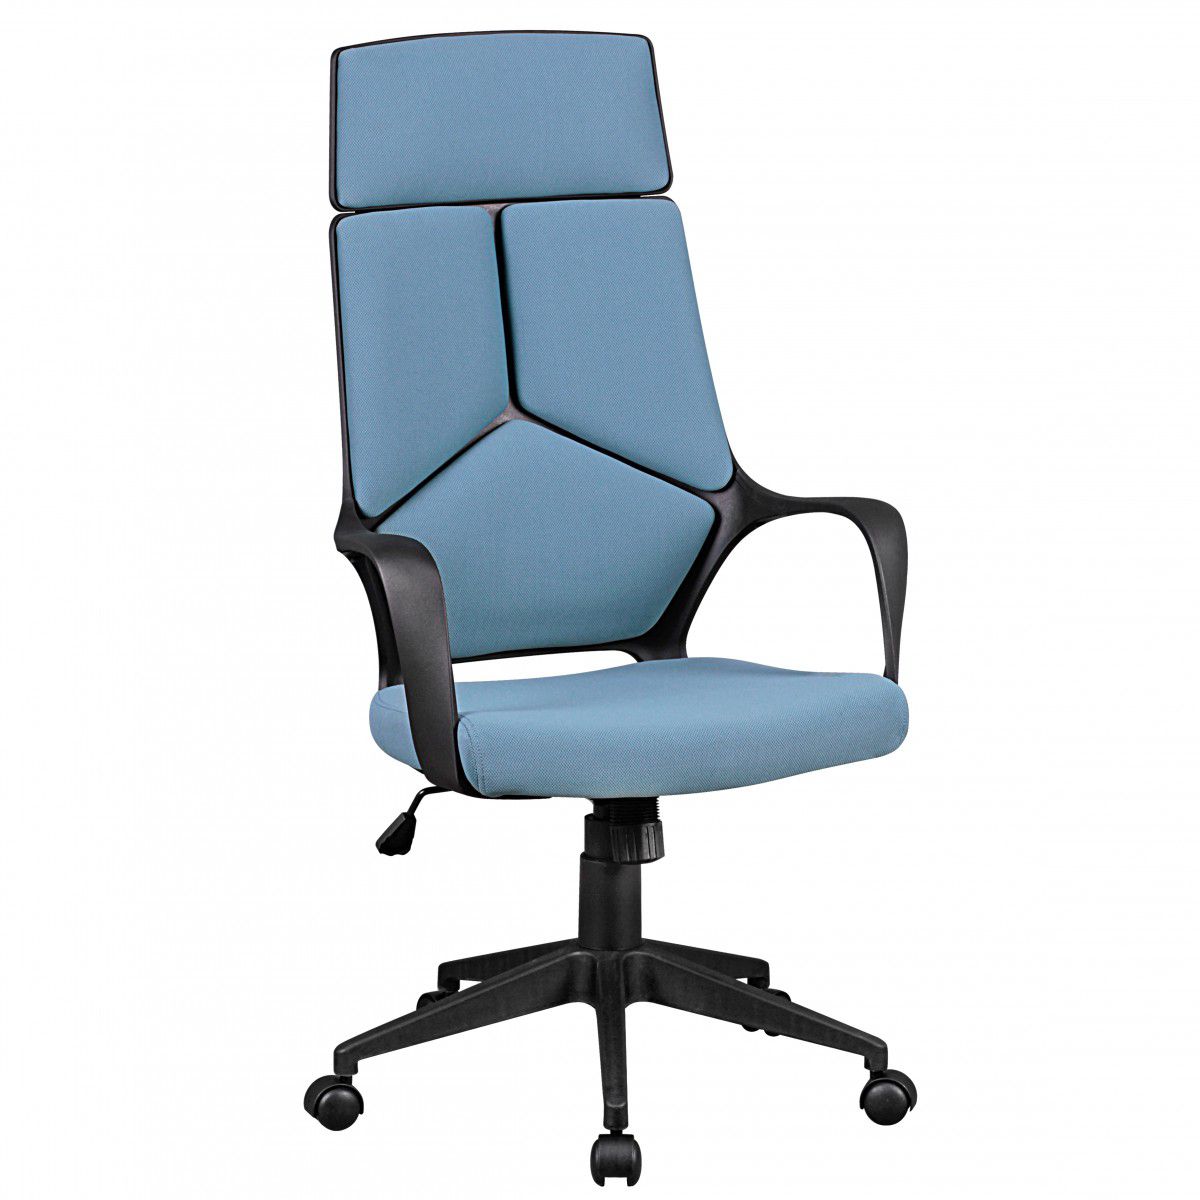 Bürodrehstuhl mit atmungsaktiven Sitz Apolo 80, Farbe: Blau